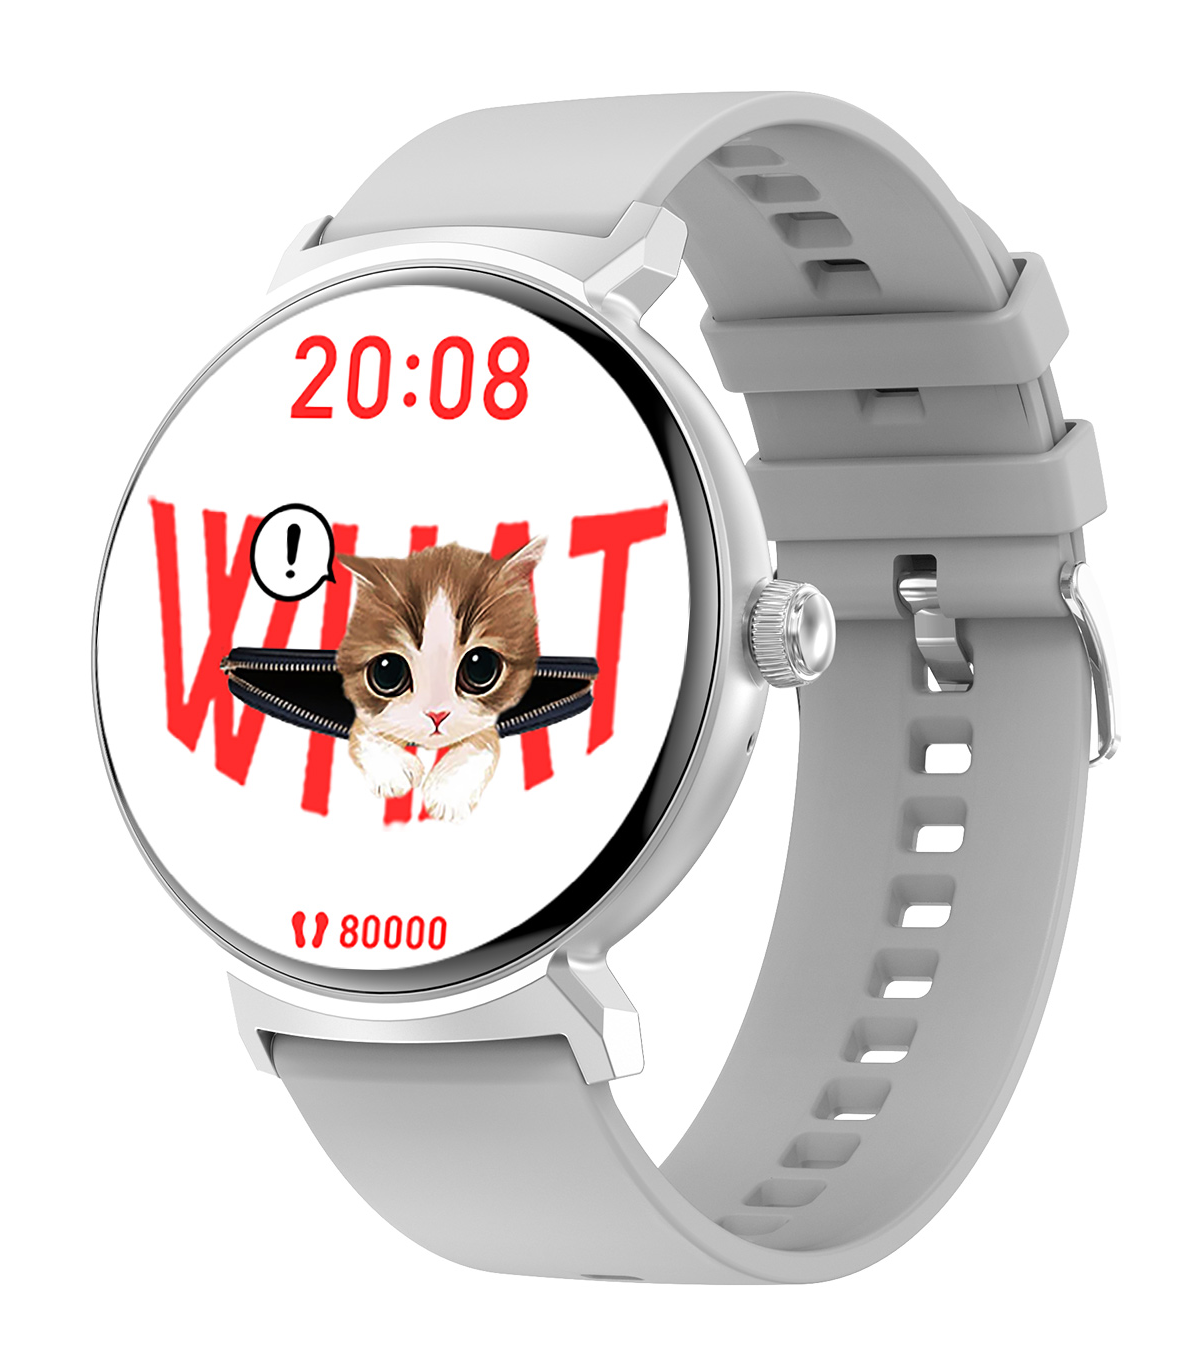 Cмарт-часы Smart Watch DT 4 New